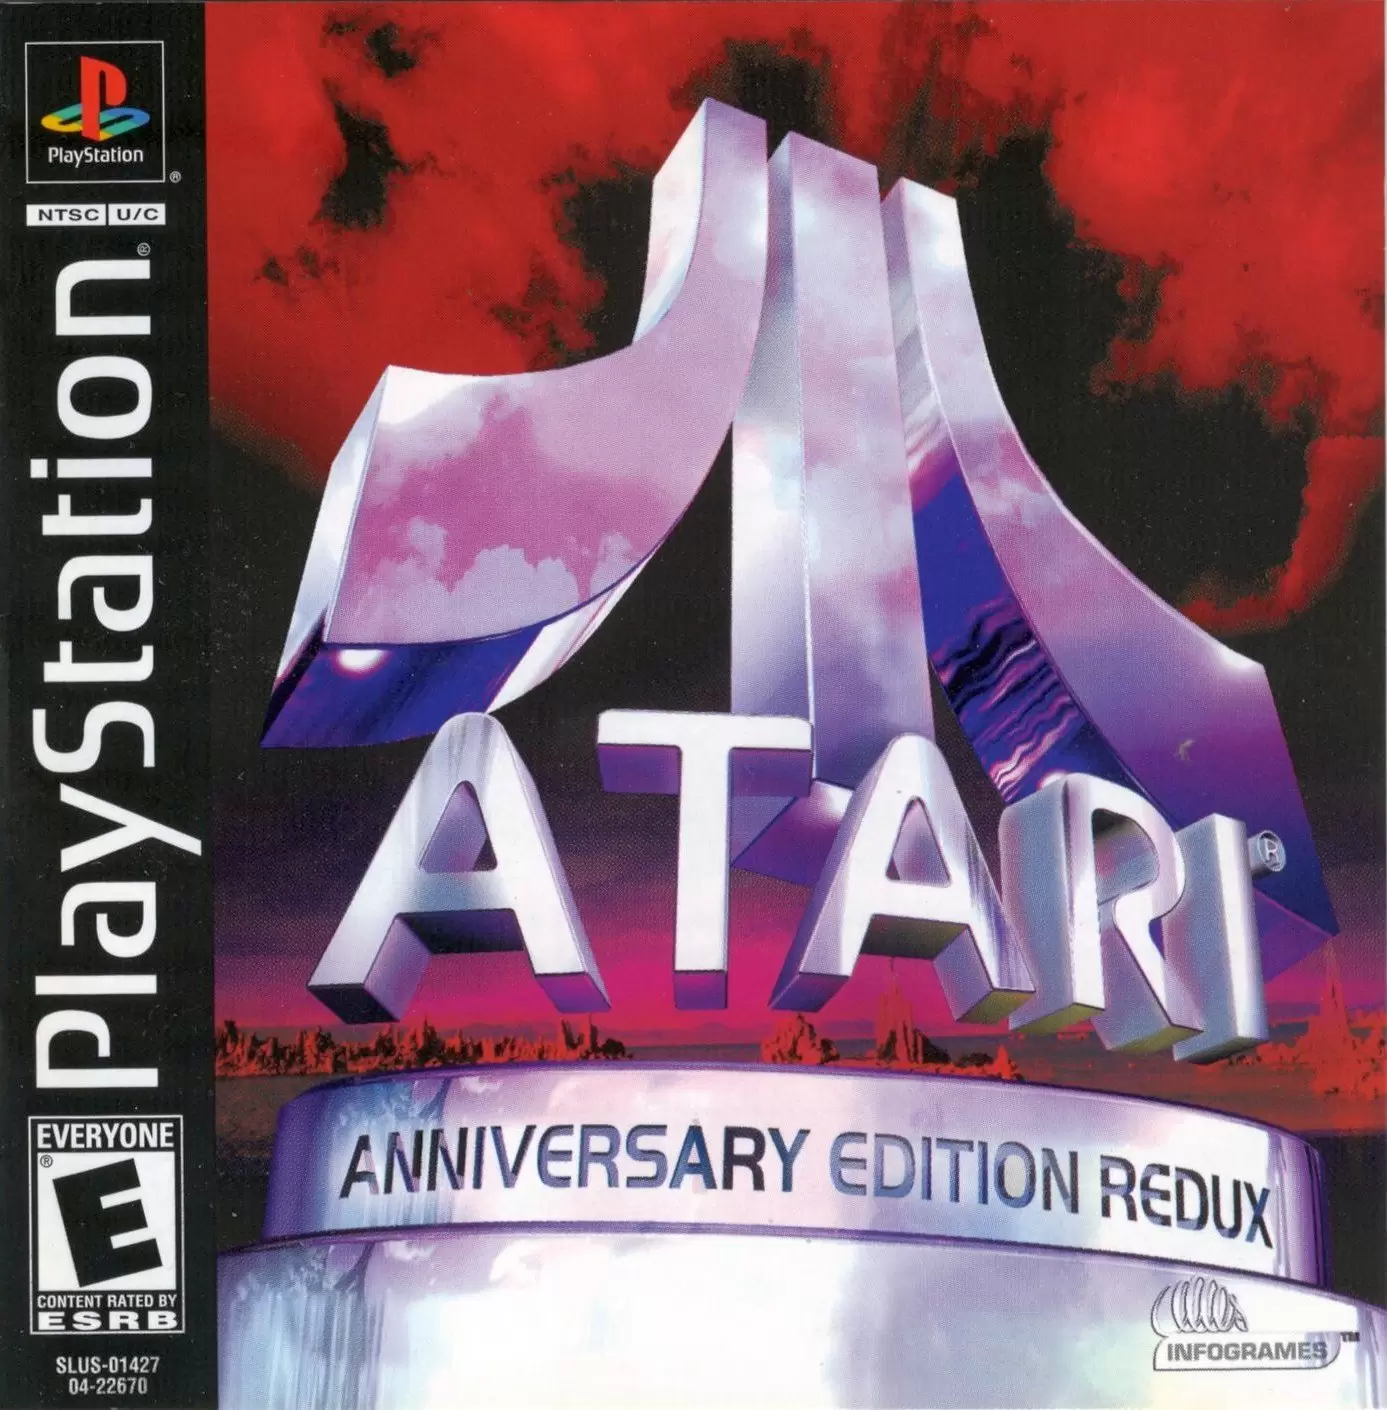 Jeux Playstation PS1 - Atari Anniversary Edition Redux